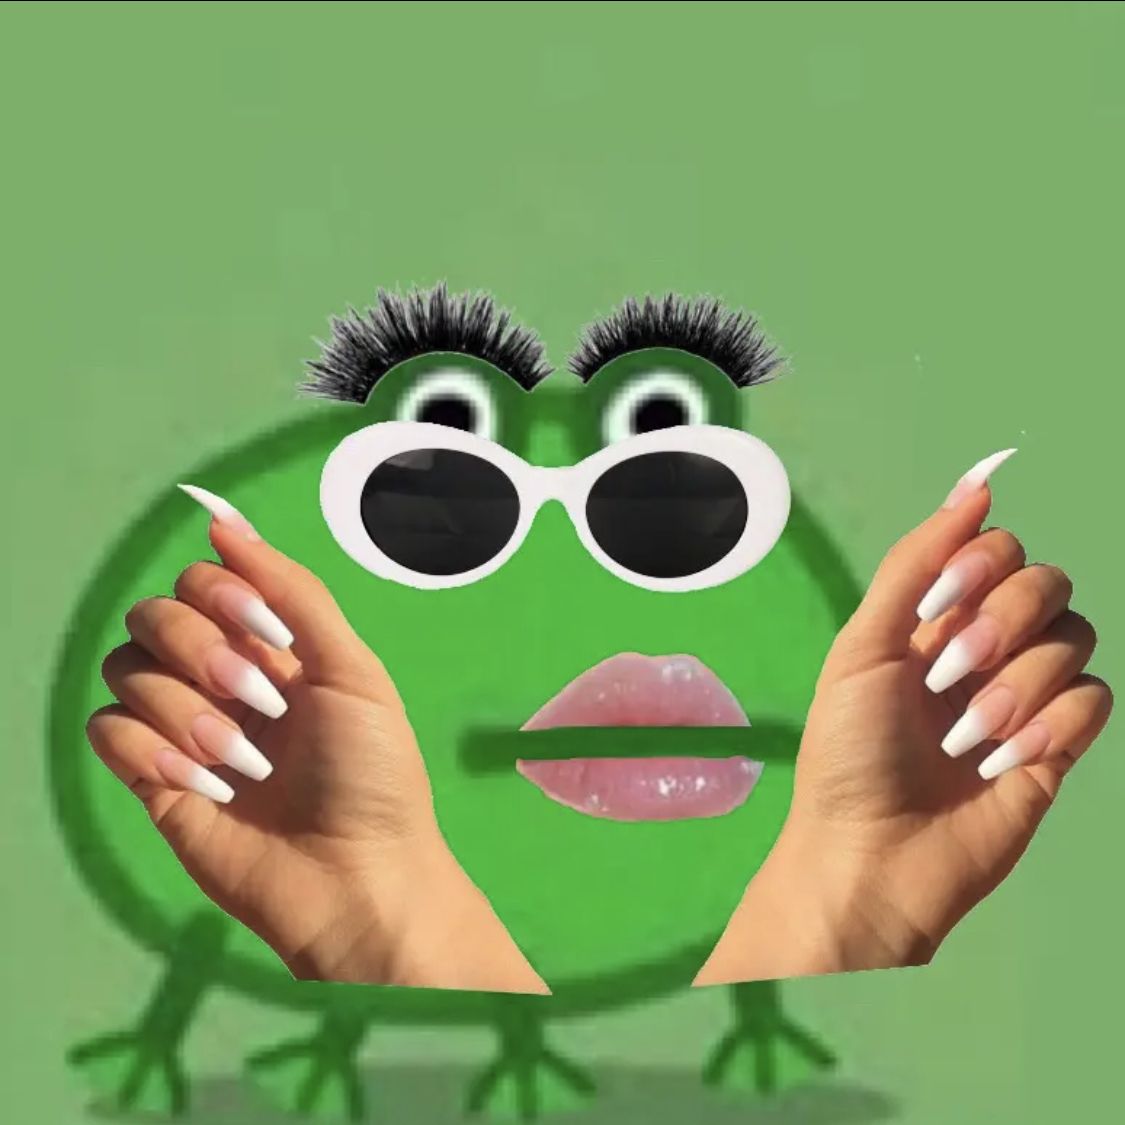 yuh periodt !. Peppa pig memes, Frog meme, Amazing frog